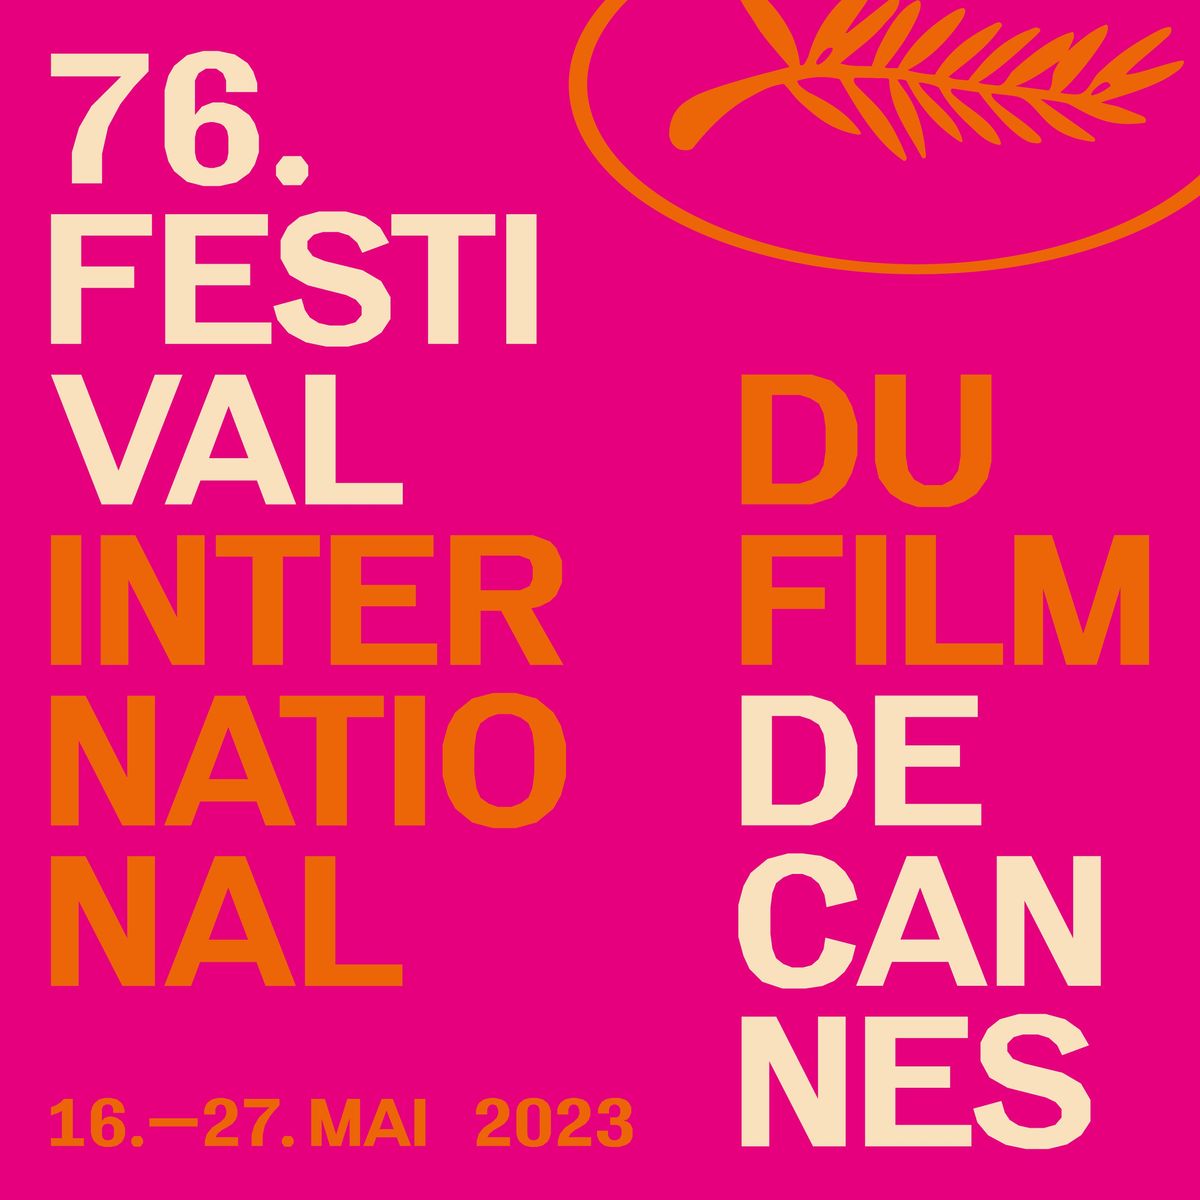 cannes film festival date announcement